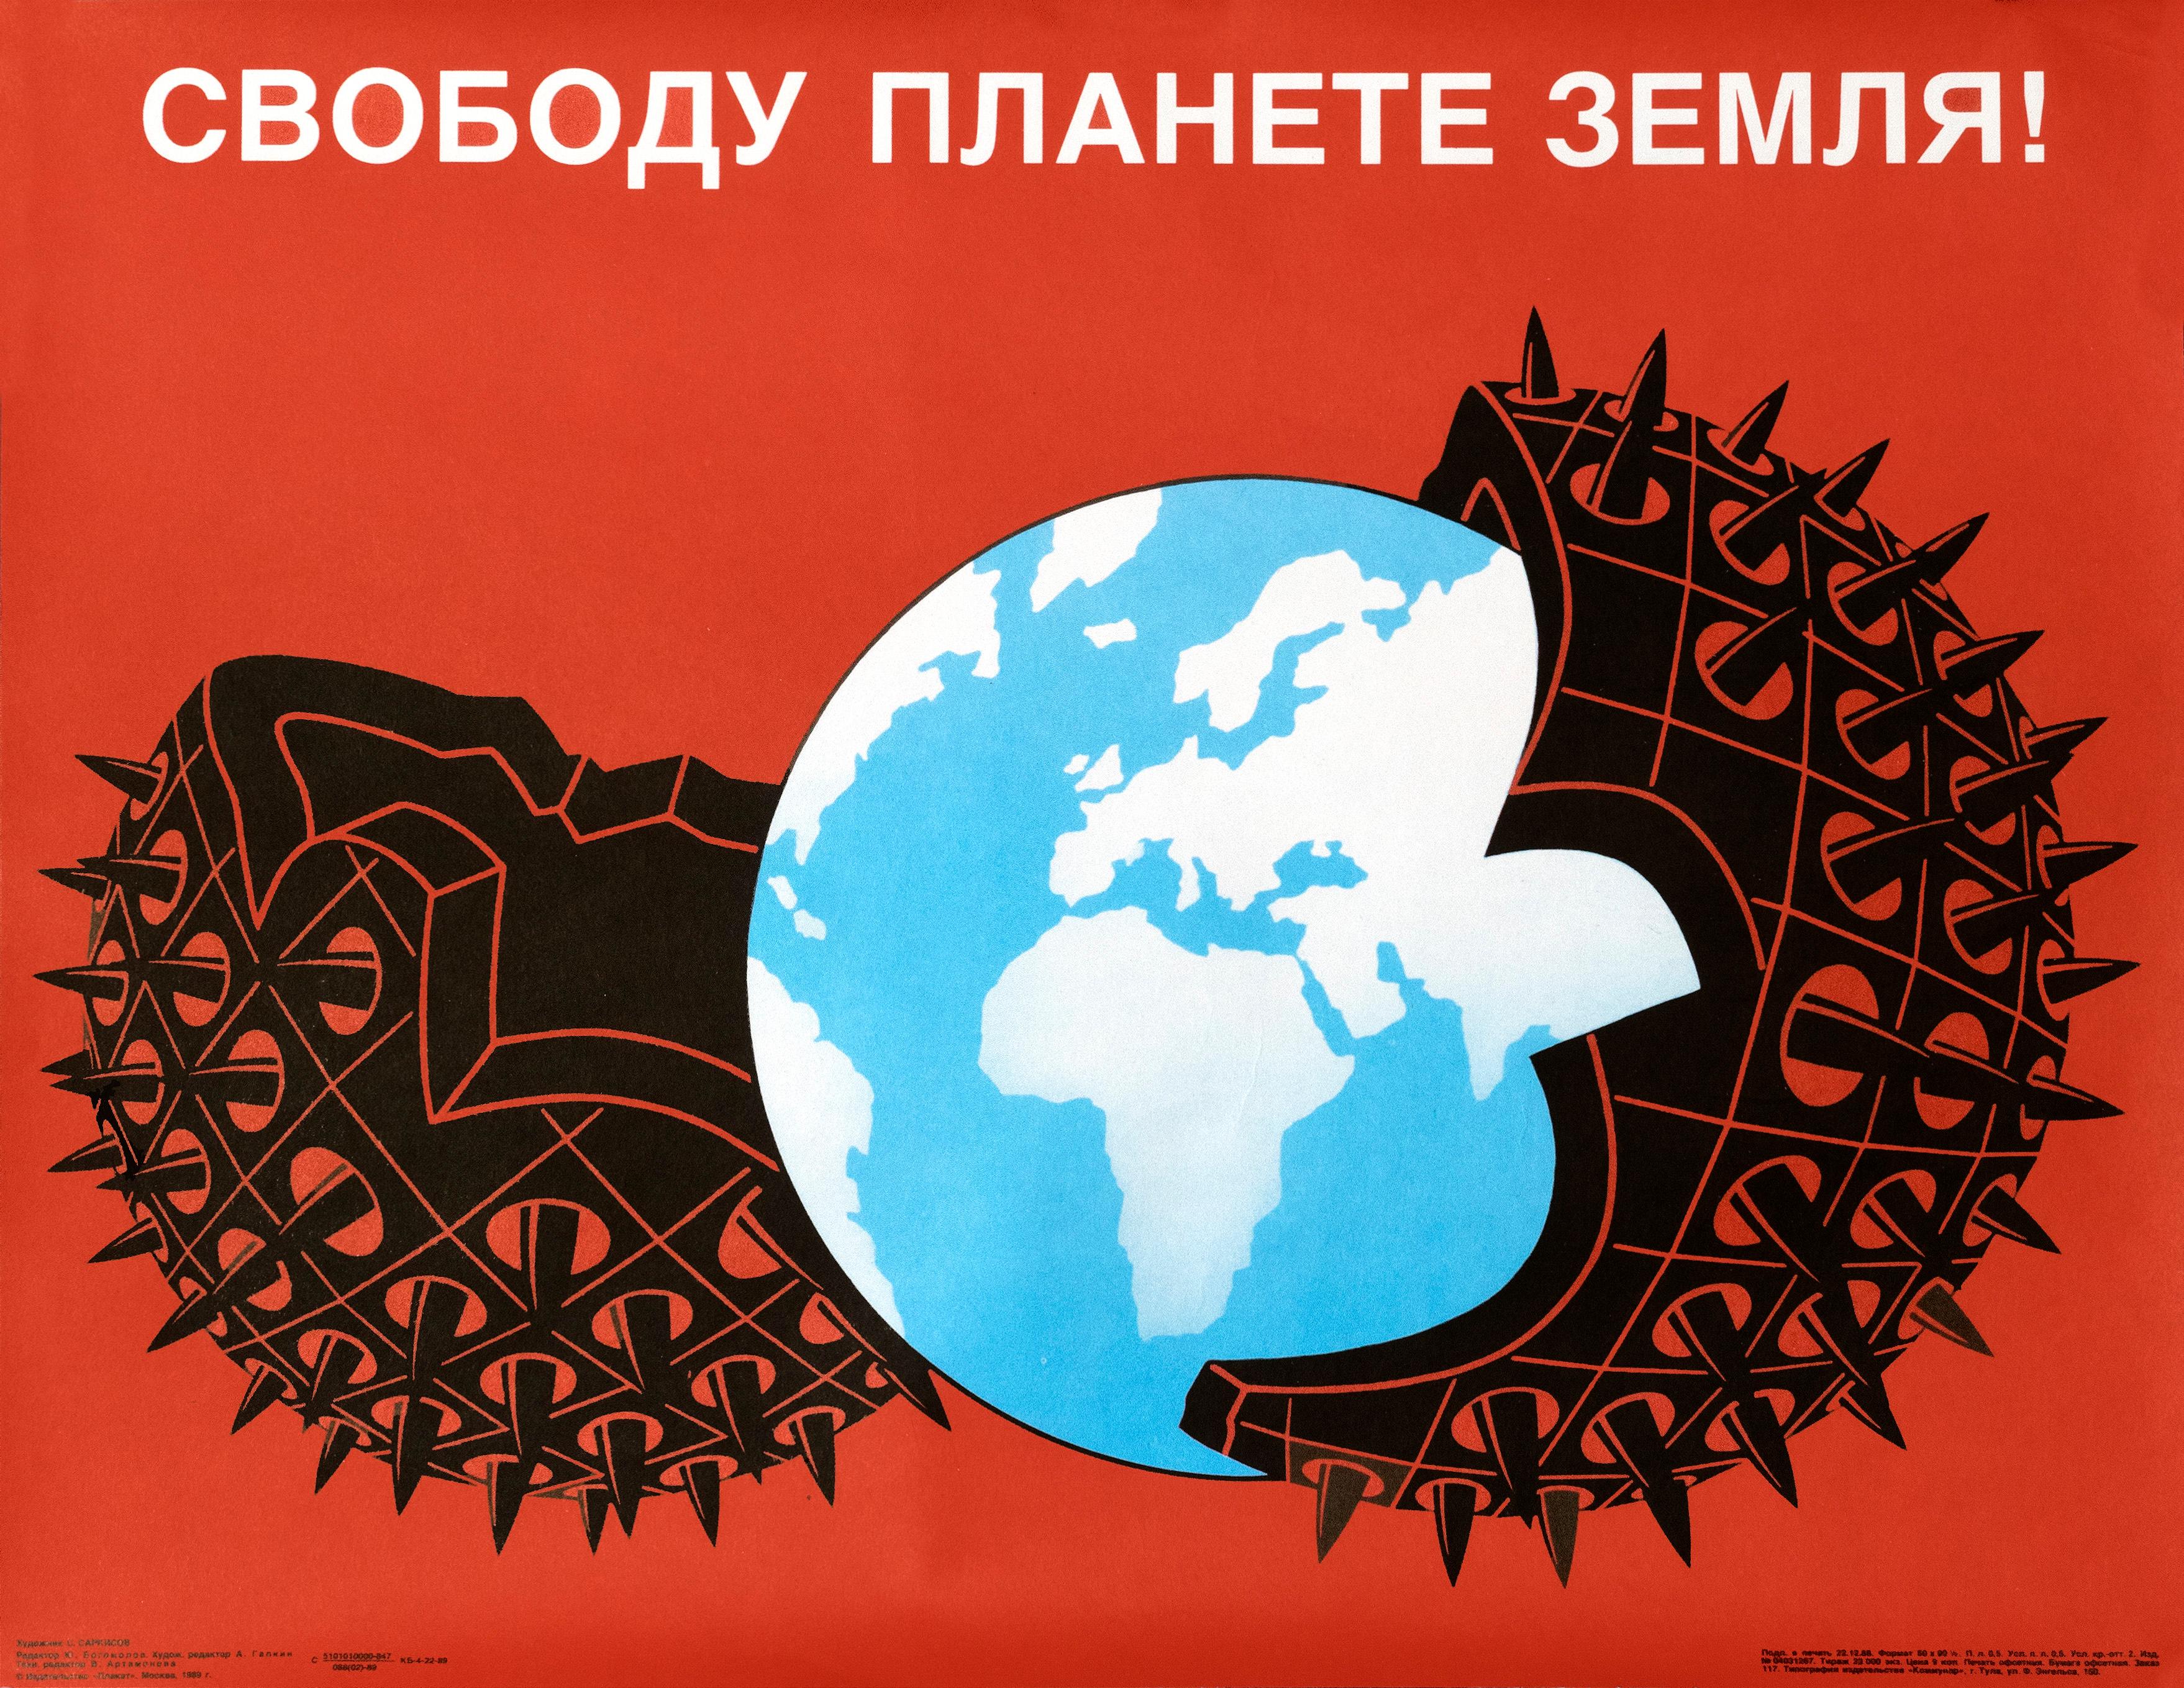 "Freedom to Planet Earth" Perestroika Era Original Vintage Poster - Print by S. Sarkisov